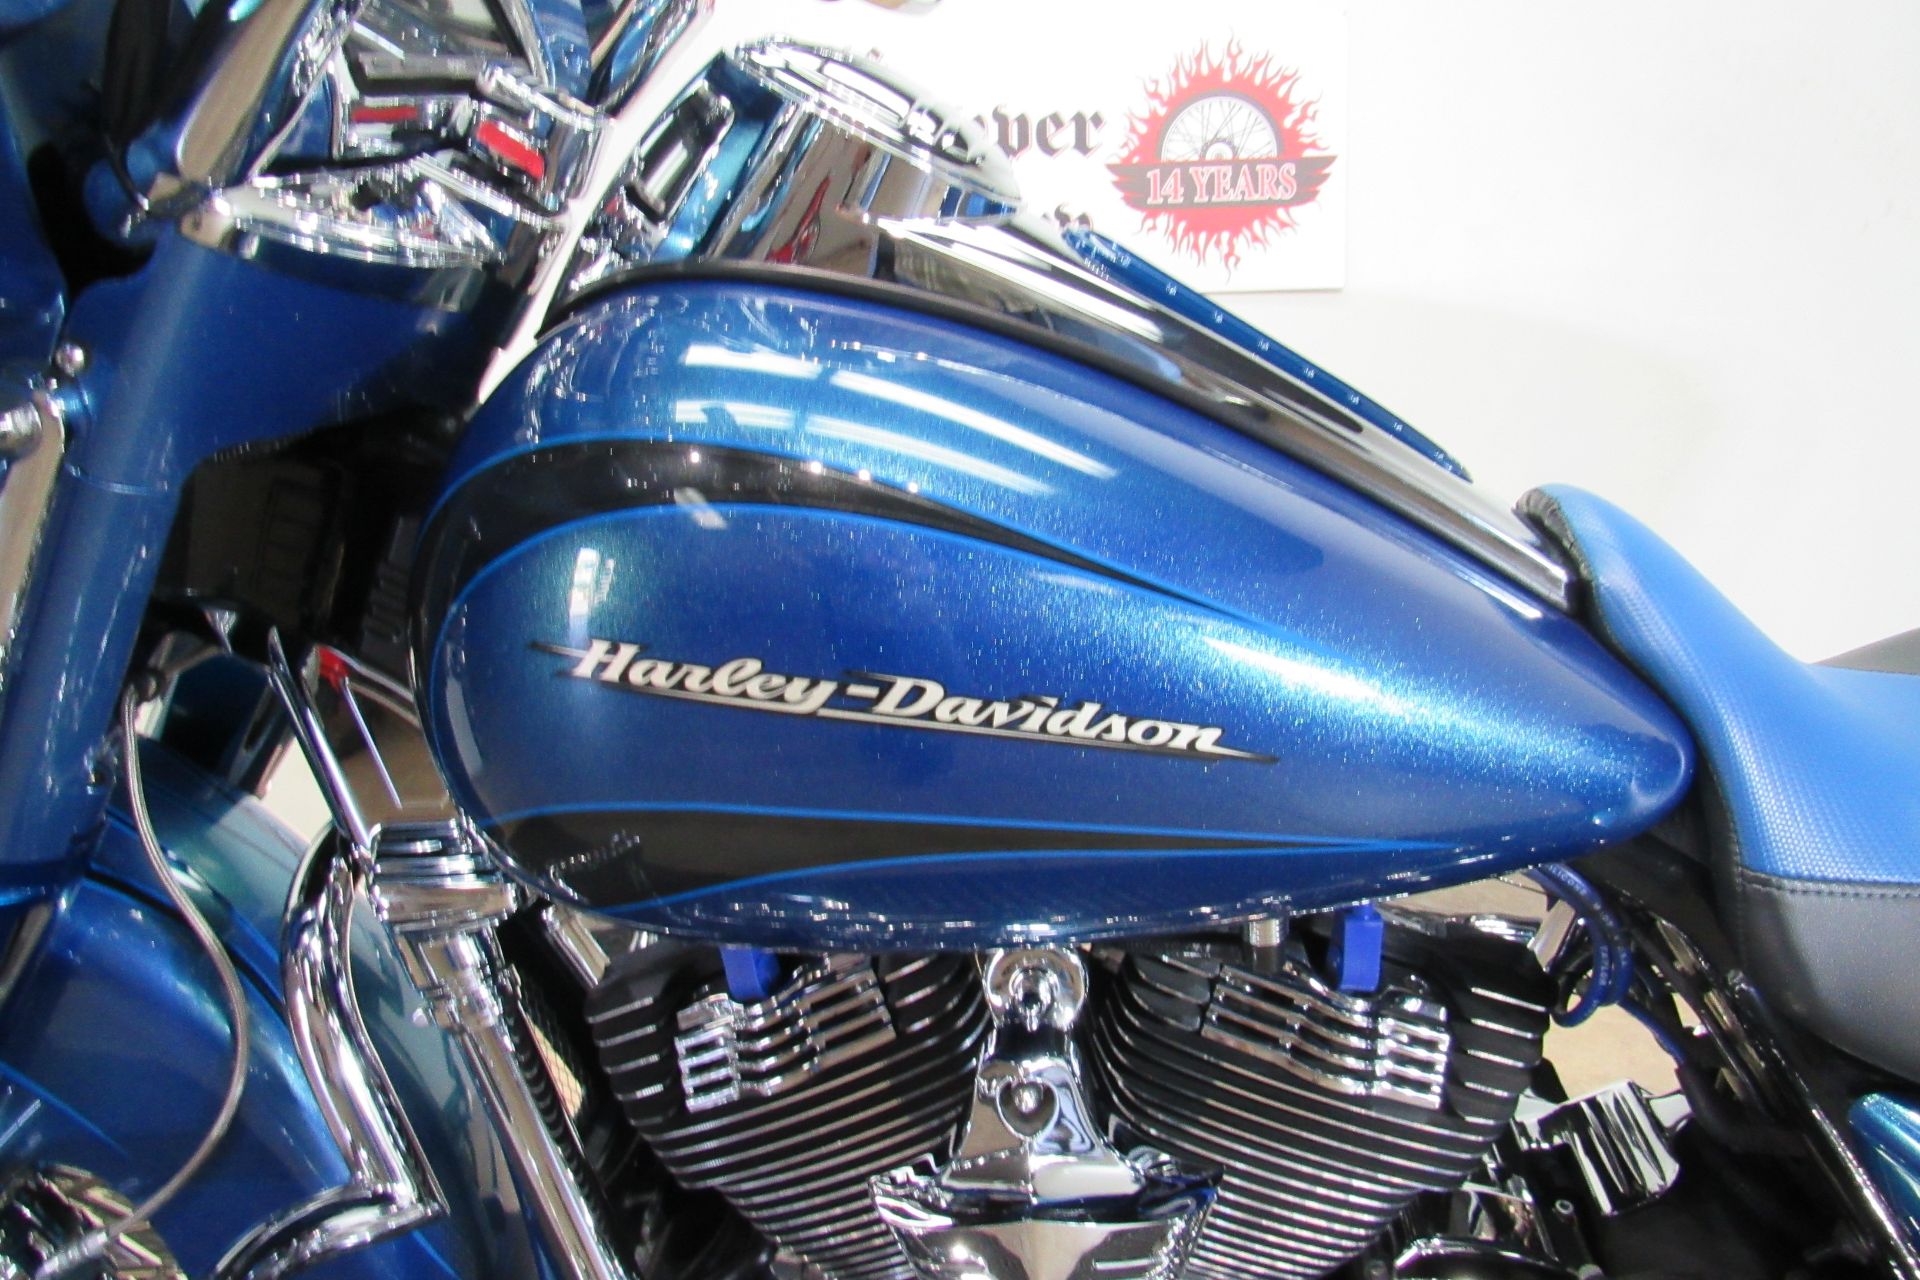 2014 Harley-Davidson Street Glide® in Temecula, California - Photo 34